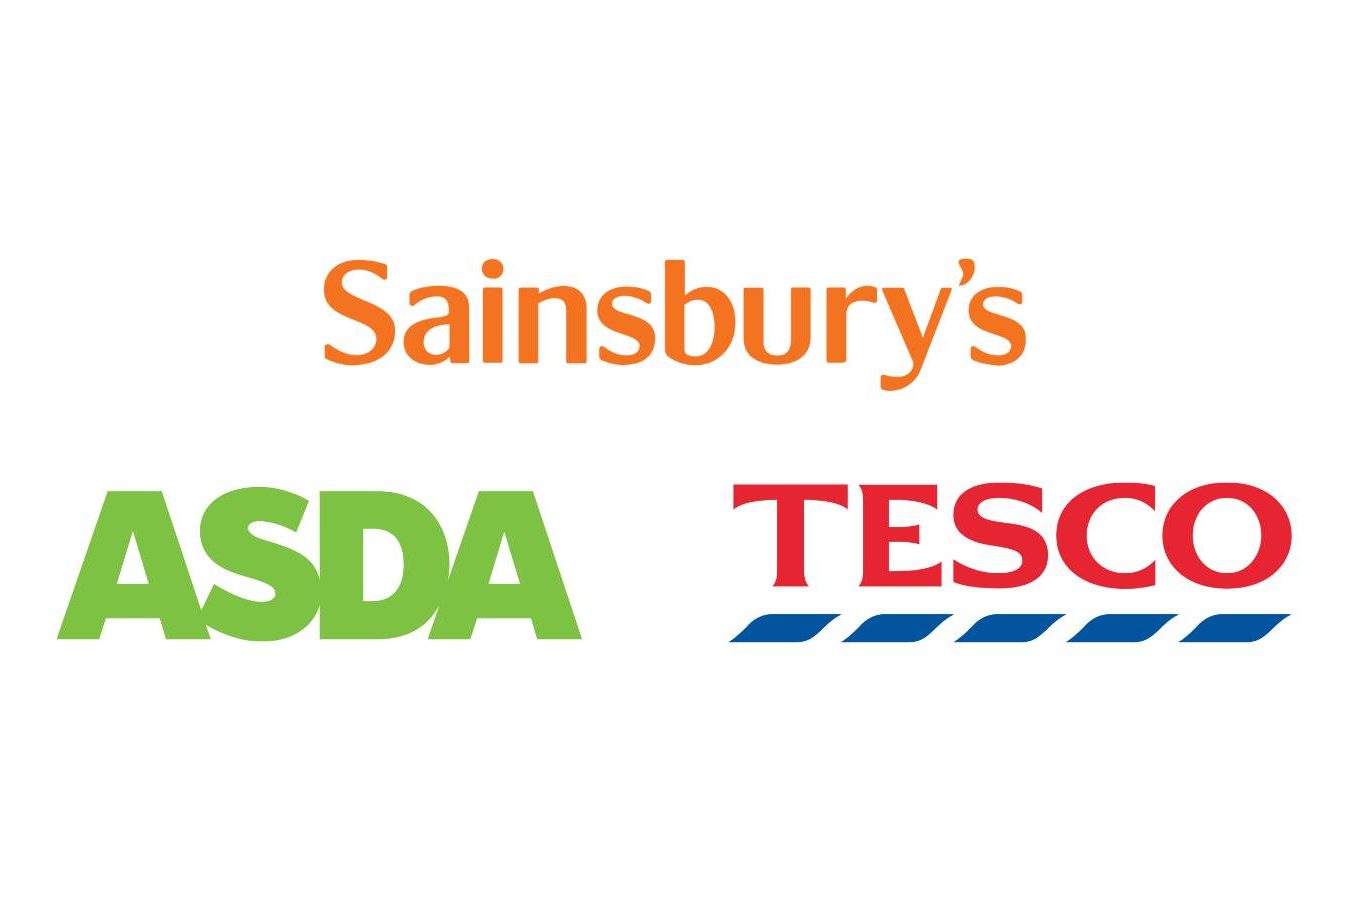 Image of the supermarket brands: Asda, Sainsbury's and Tesco